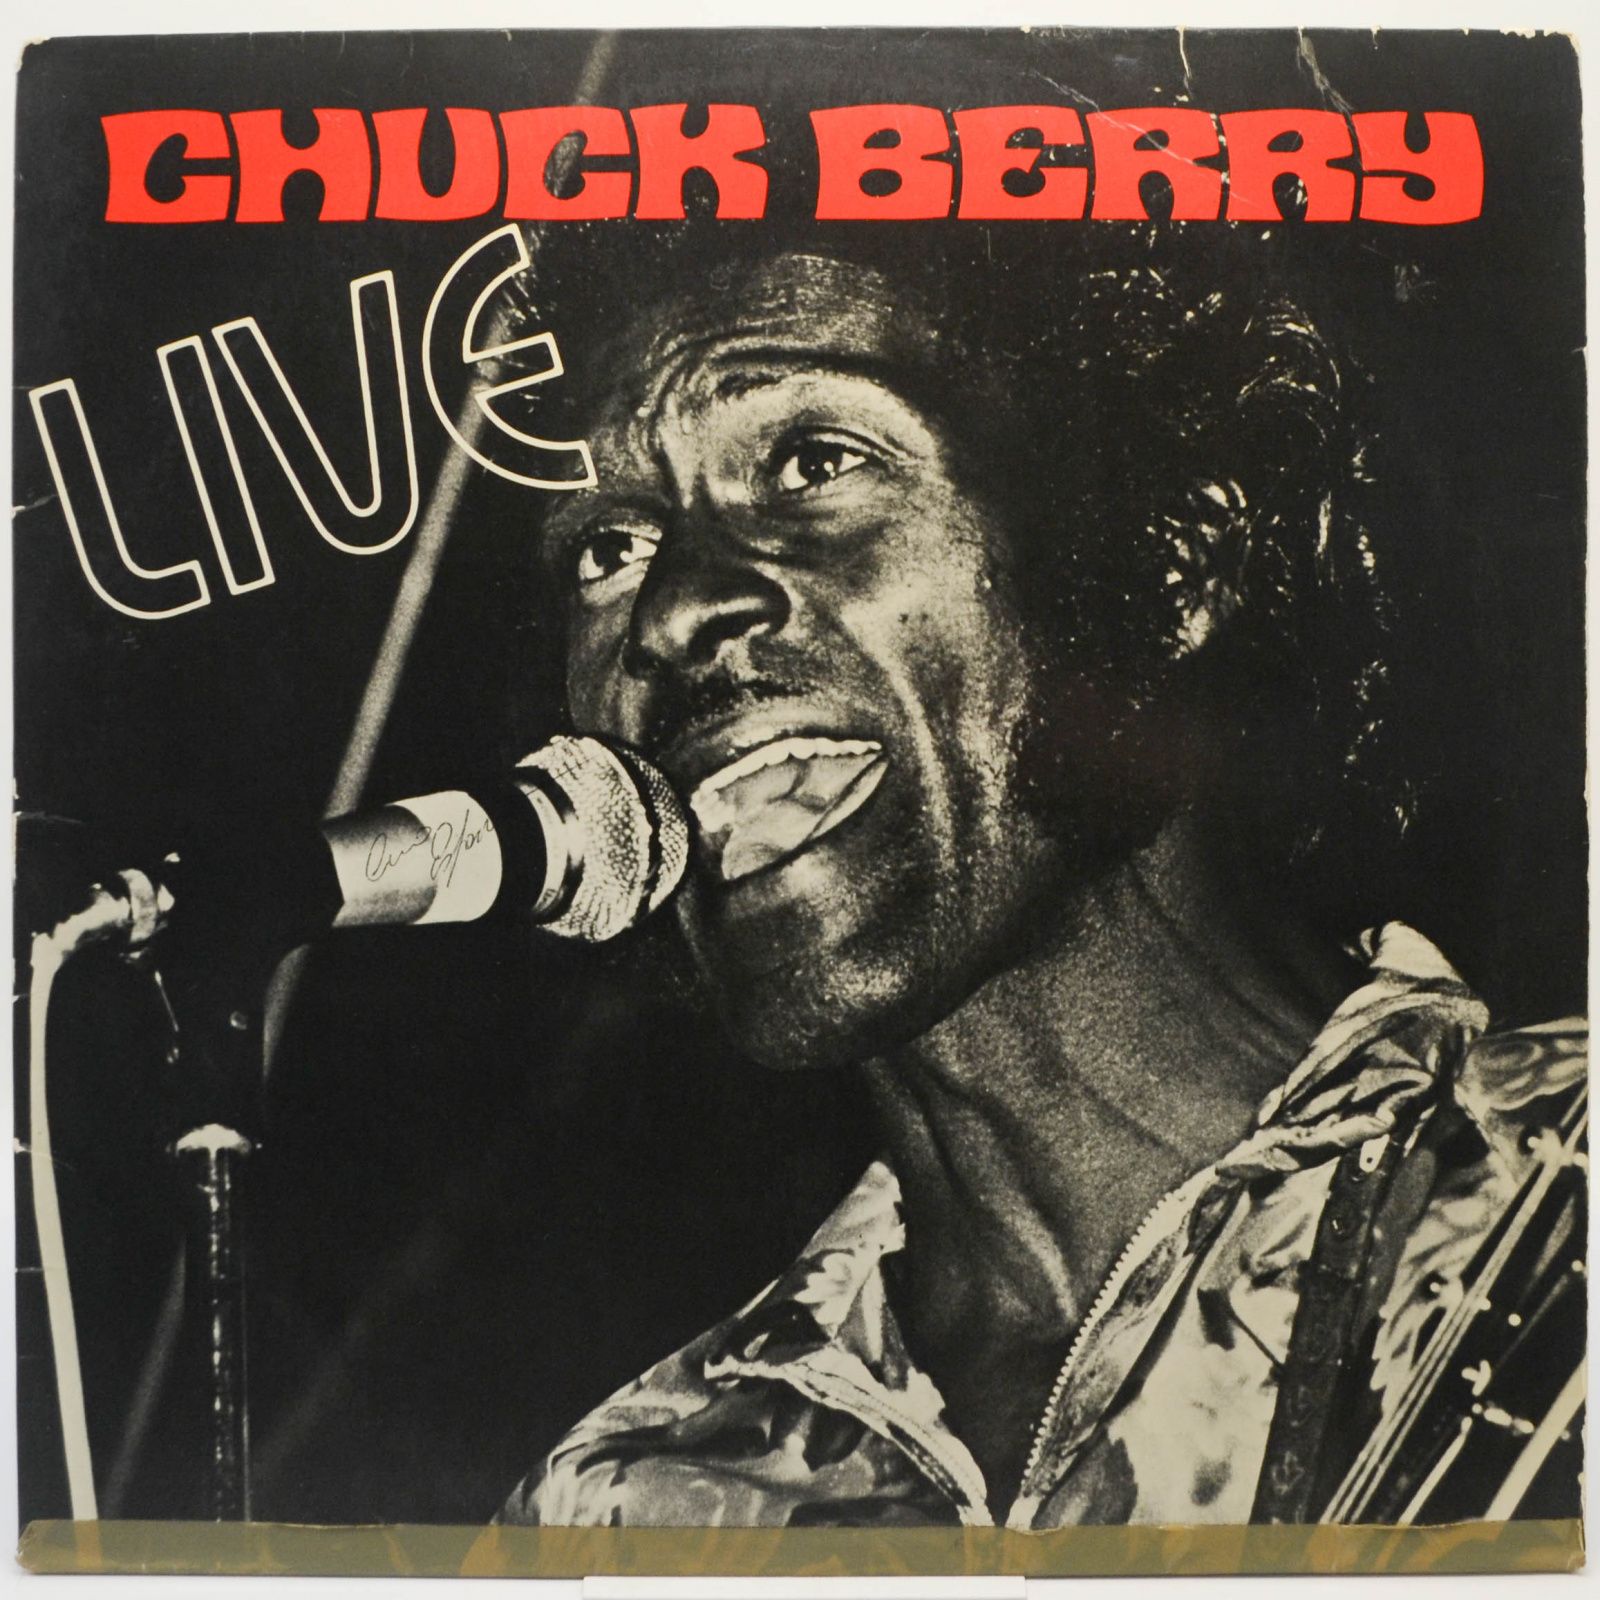 Chuck Berry — Chuck Berry Live, 1963